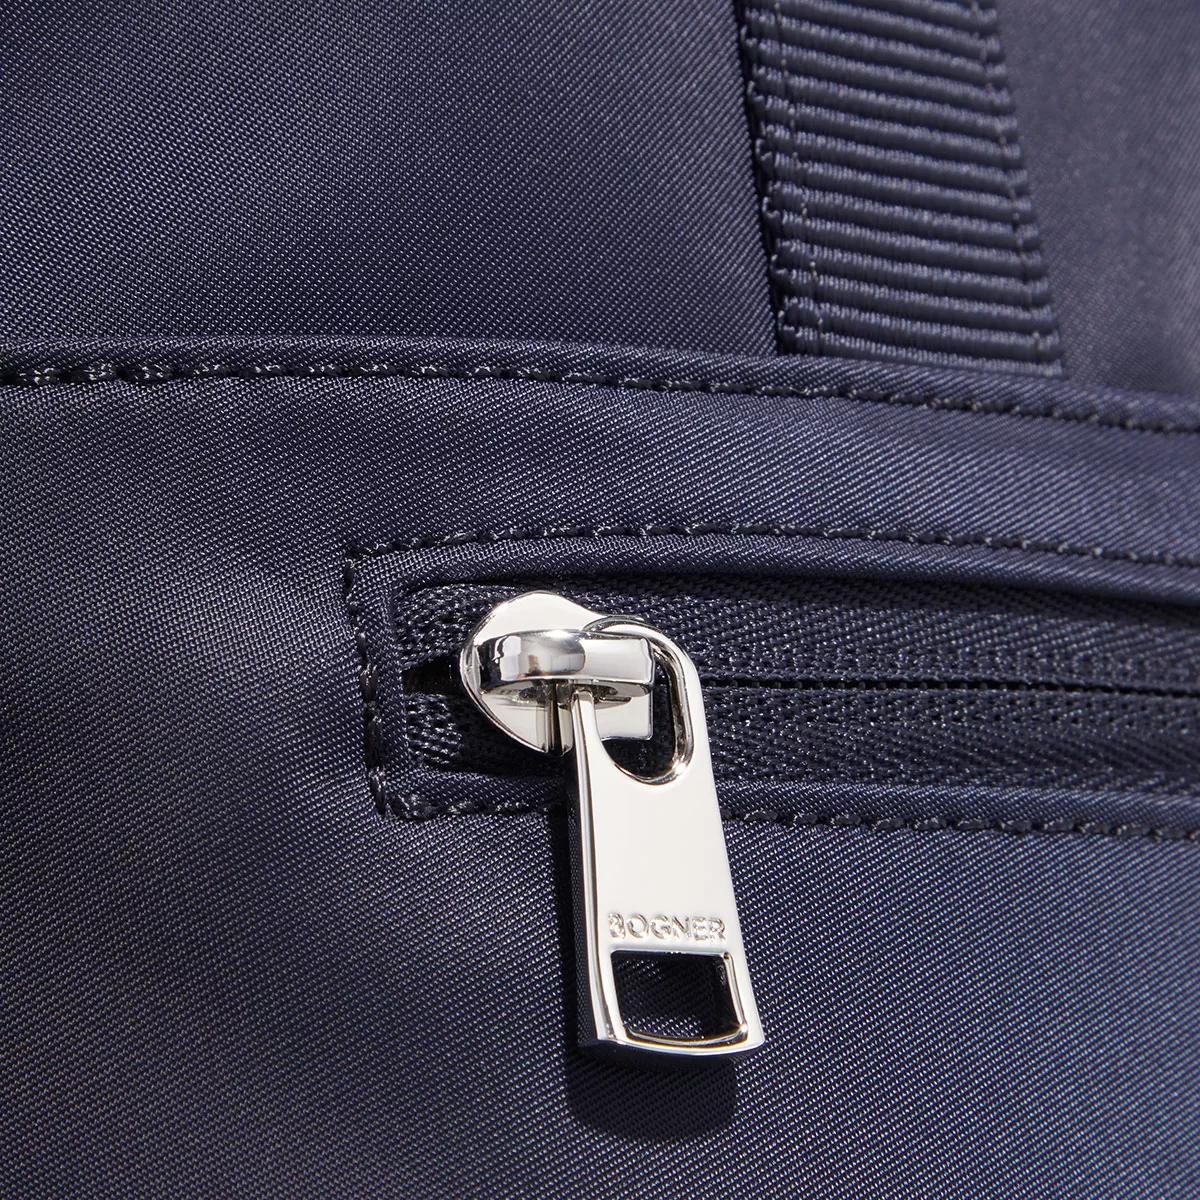 Bogner Rugzakken maggia malea backpack in blauw